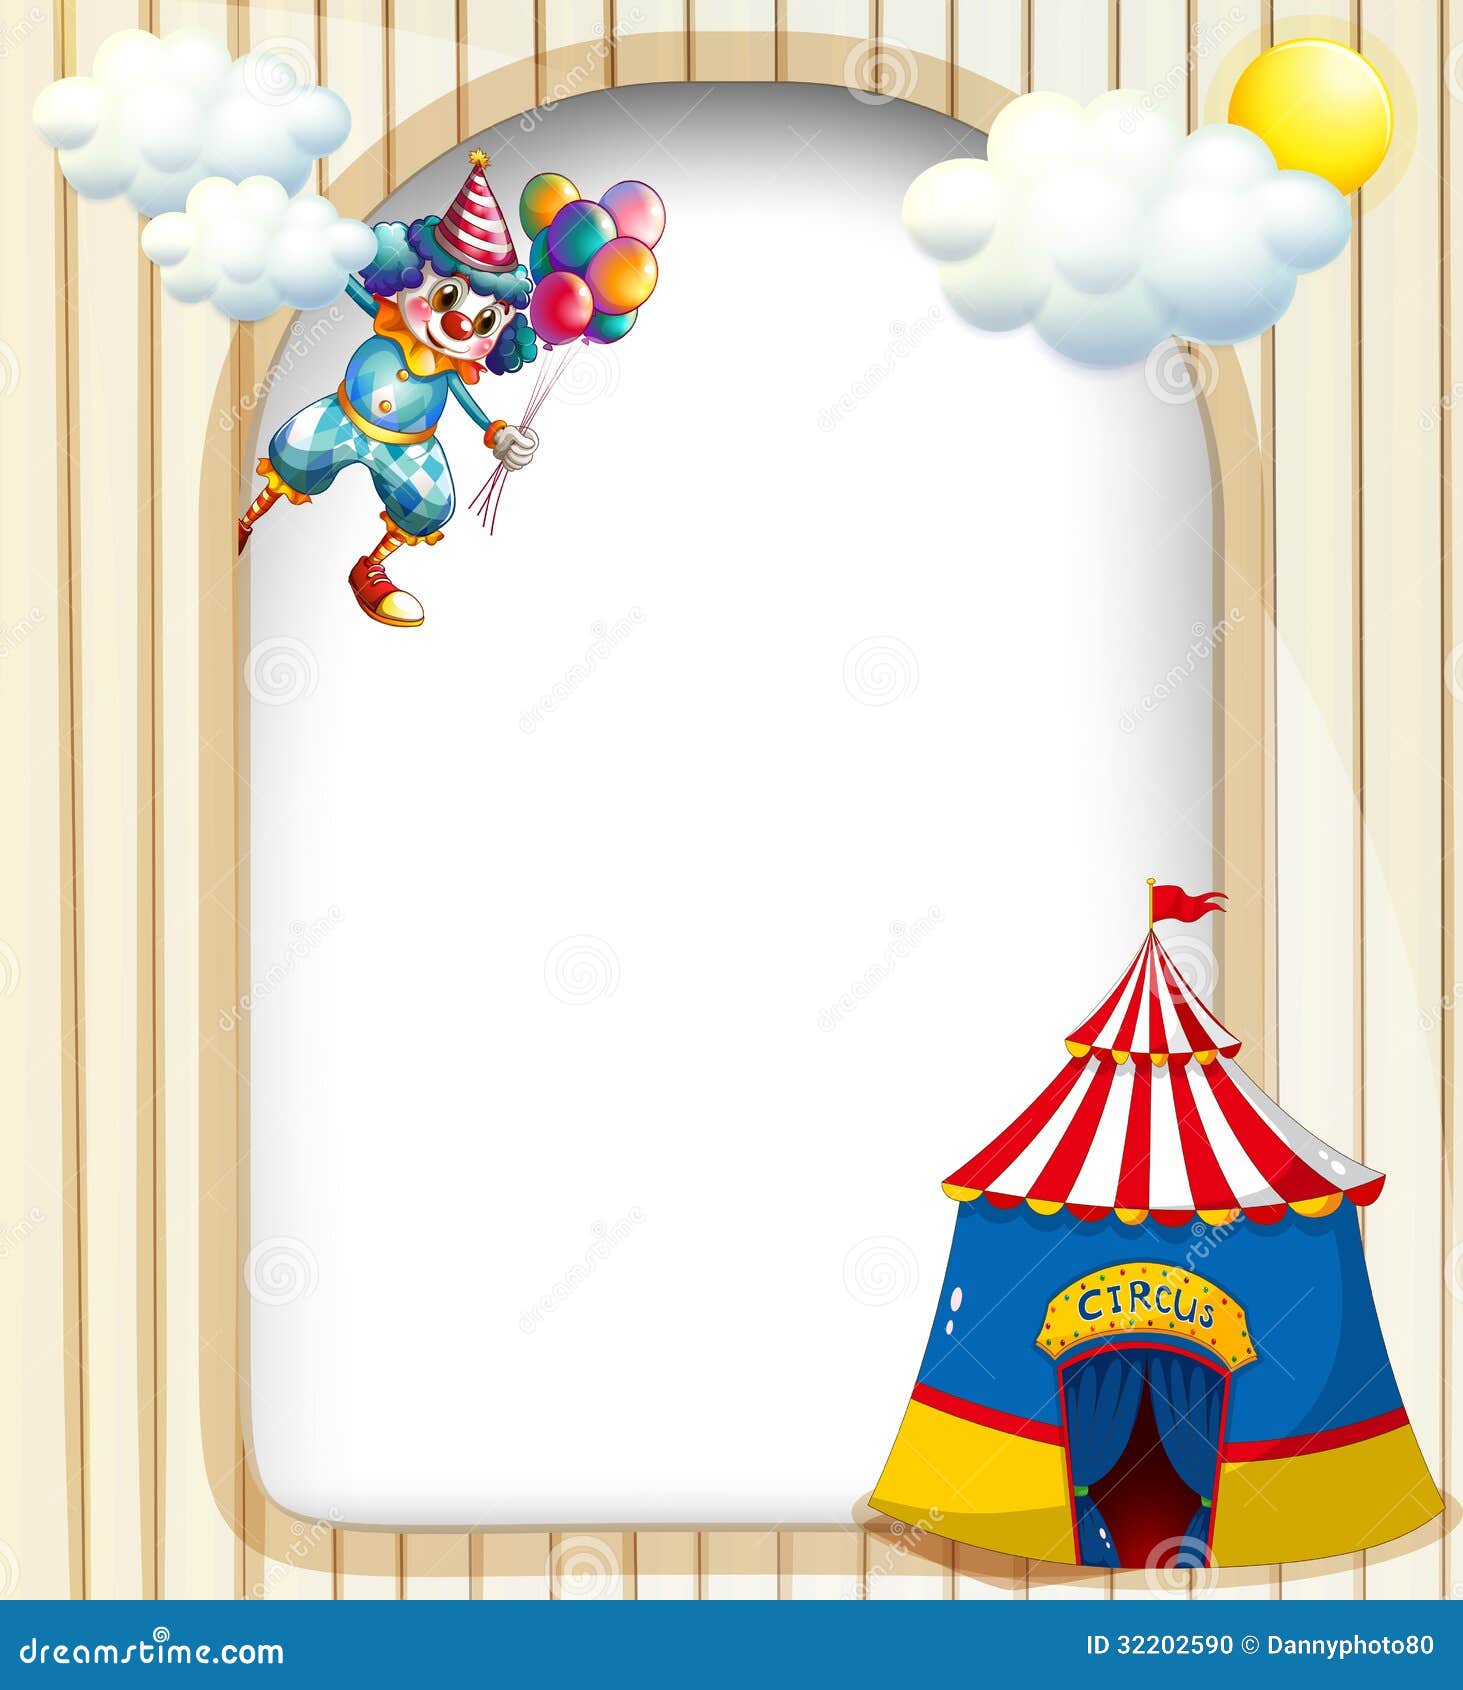 template clown circus tent illustration 32202590